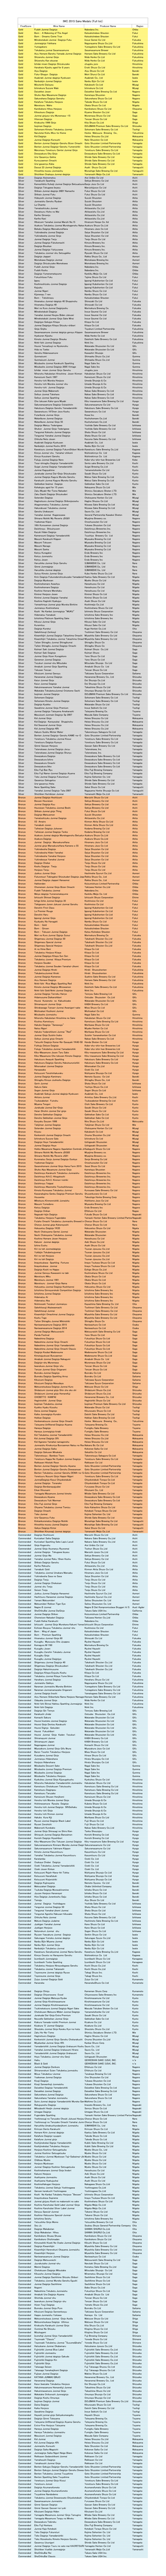 IWC 2015 Sake Medal List